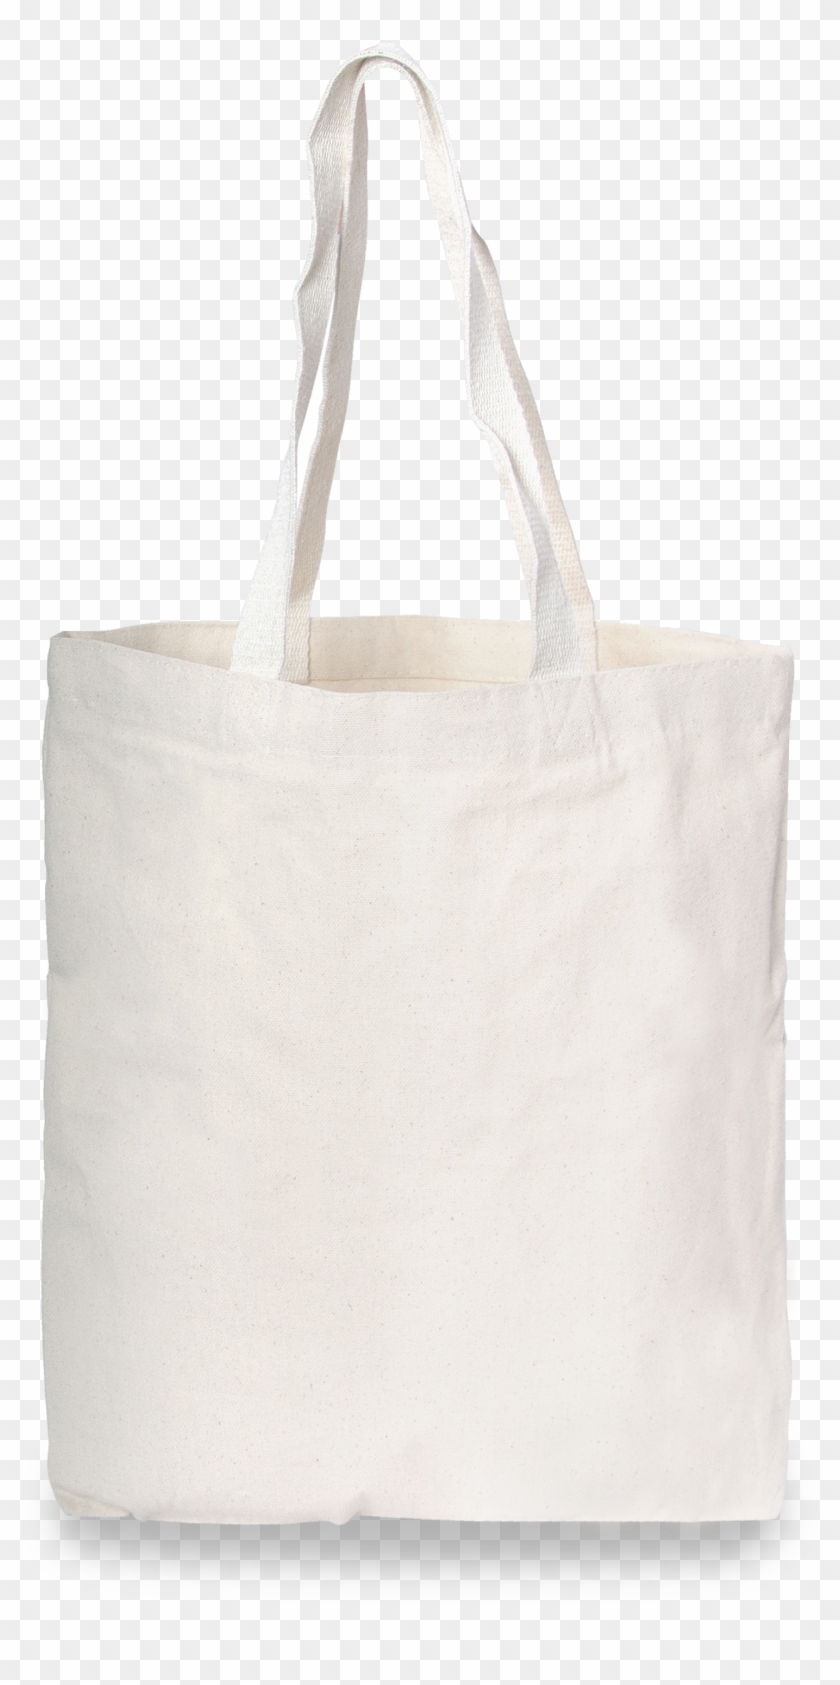 Cotton Canvas Tote Bag - Canvas Tote Tote Bag Png, Transparent Png ...